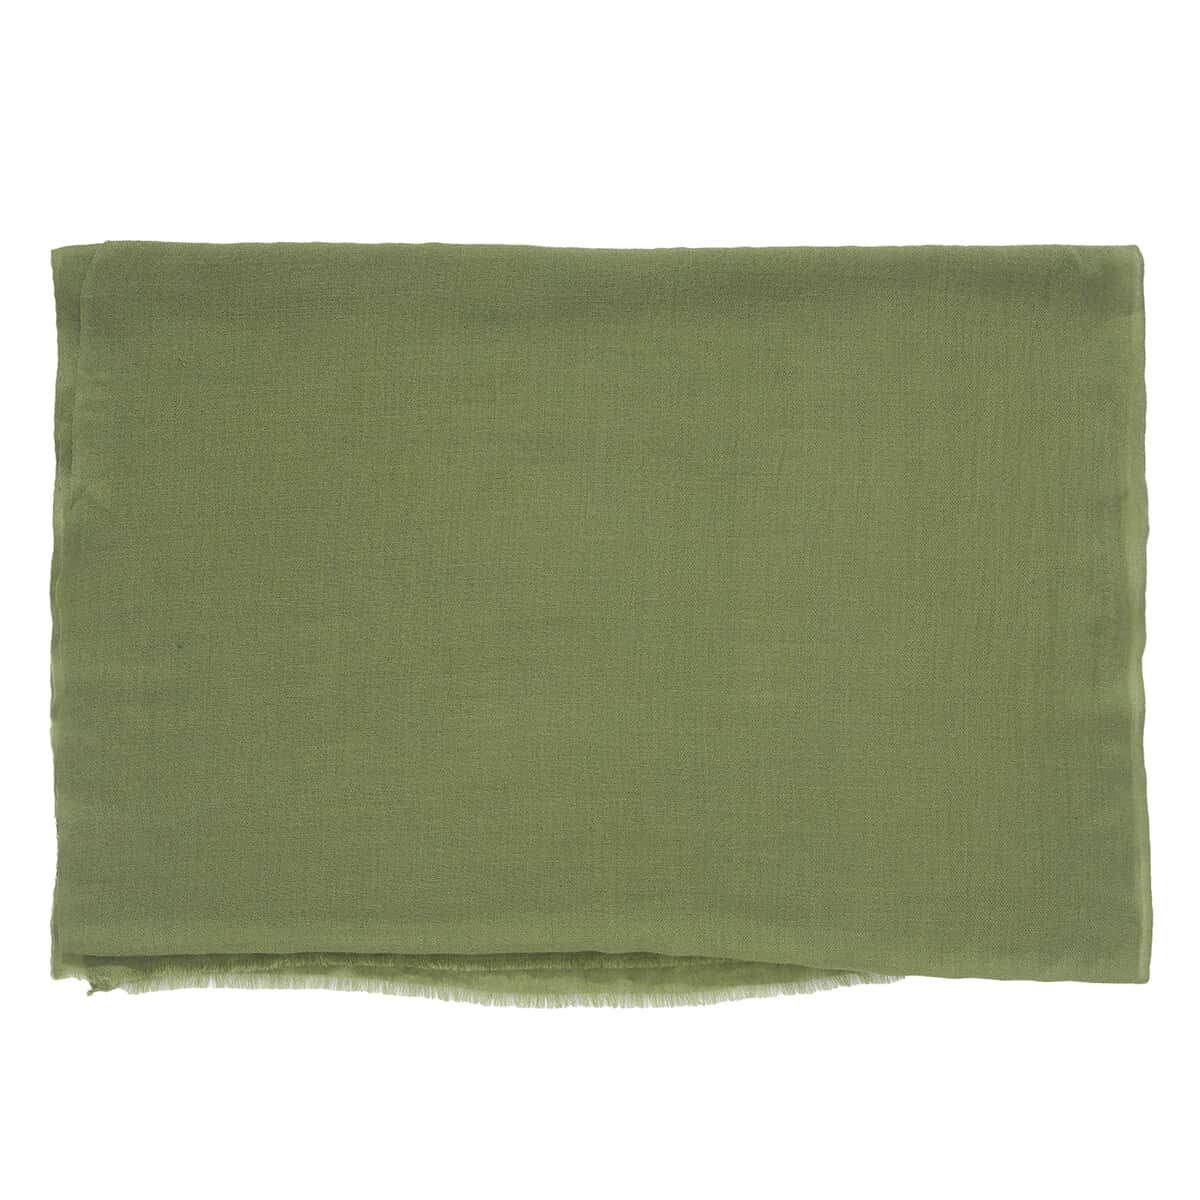 100% Pashmina Cashmere Wool Designer LA MAREY Olive Green Scarf - (One Size Fits Most) image number 4